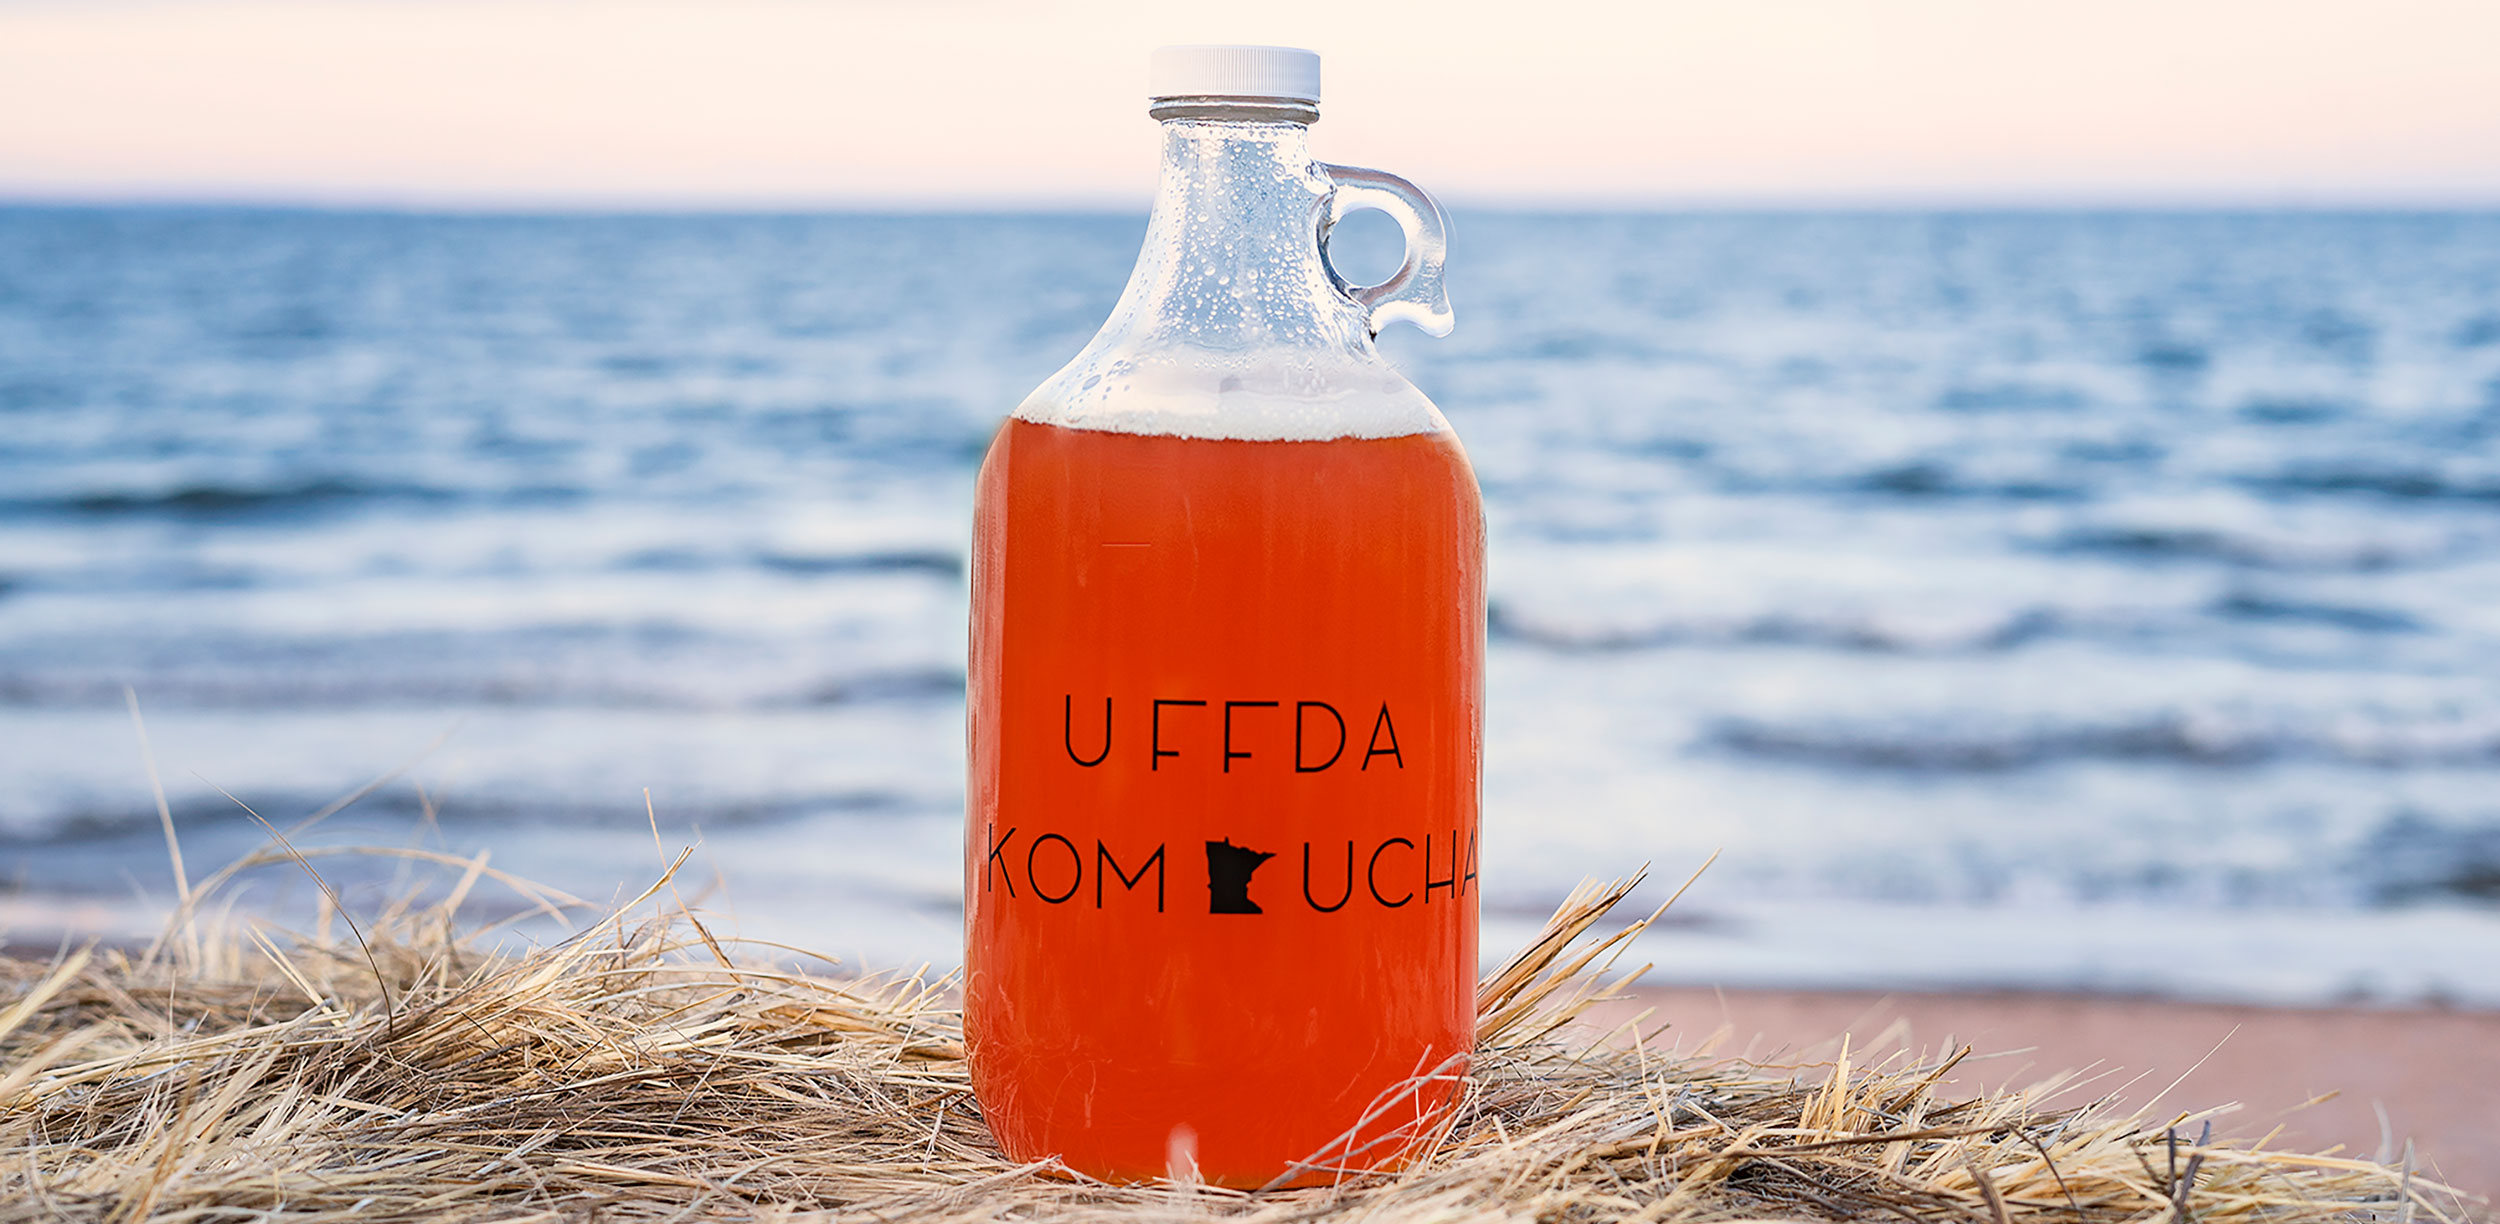 Bottle of kombucha on a beach